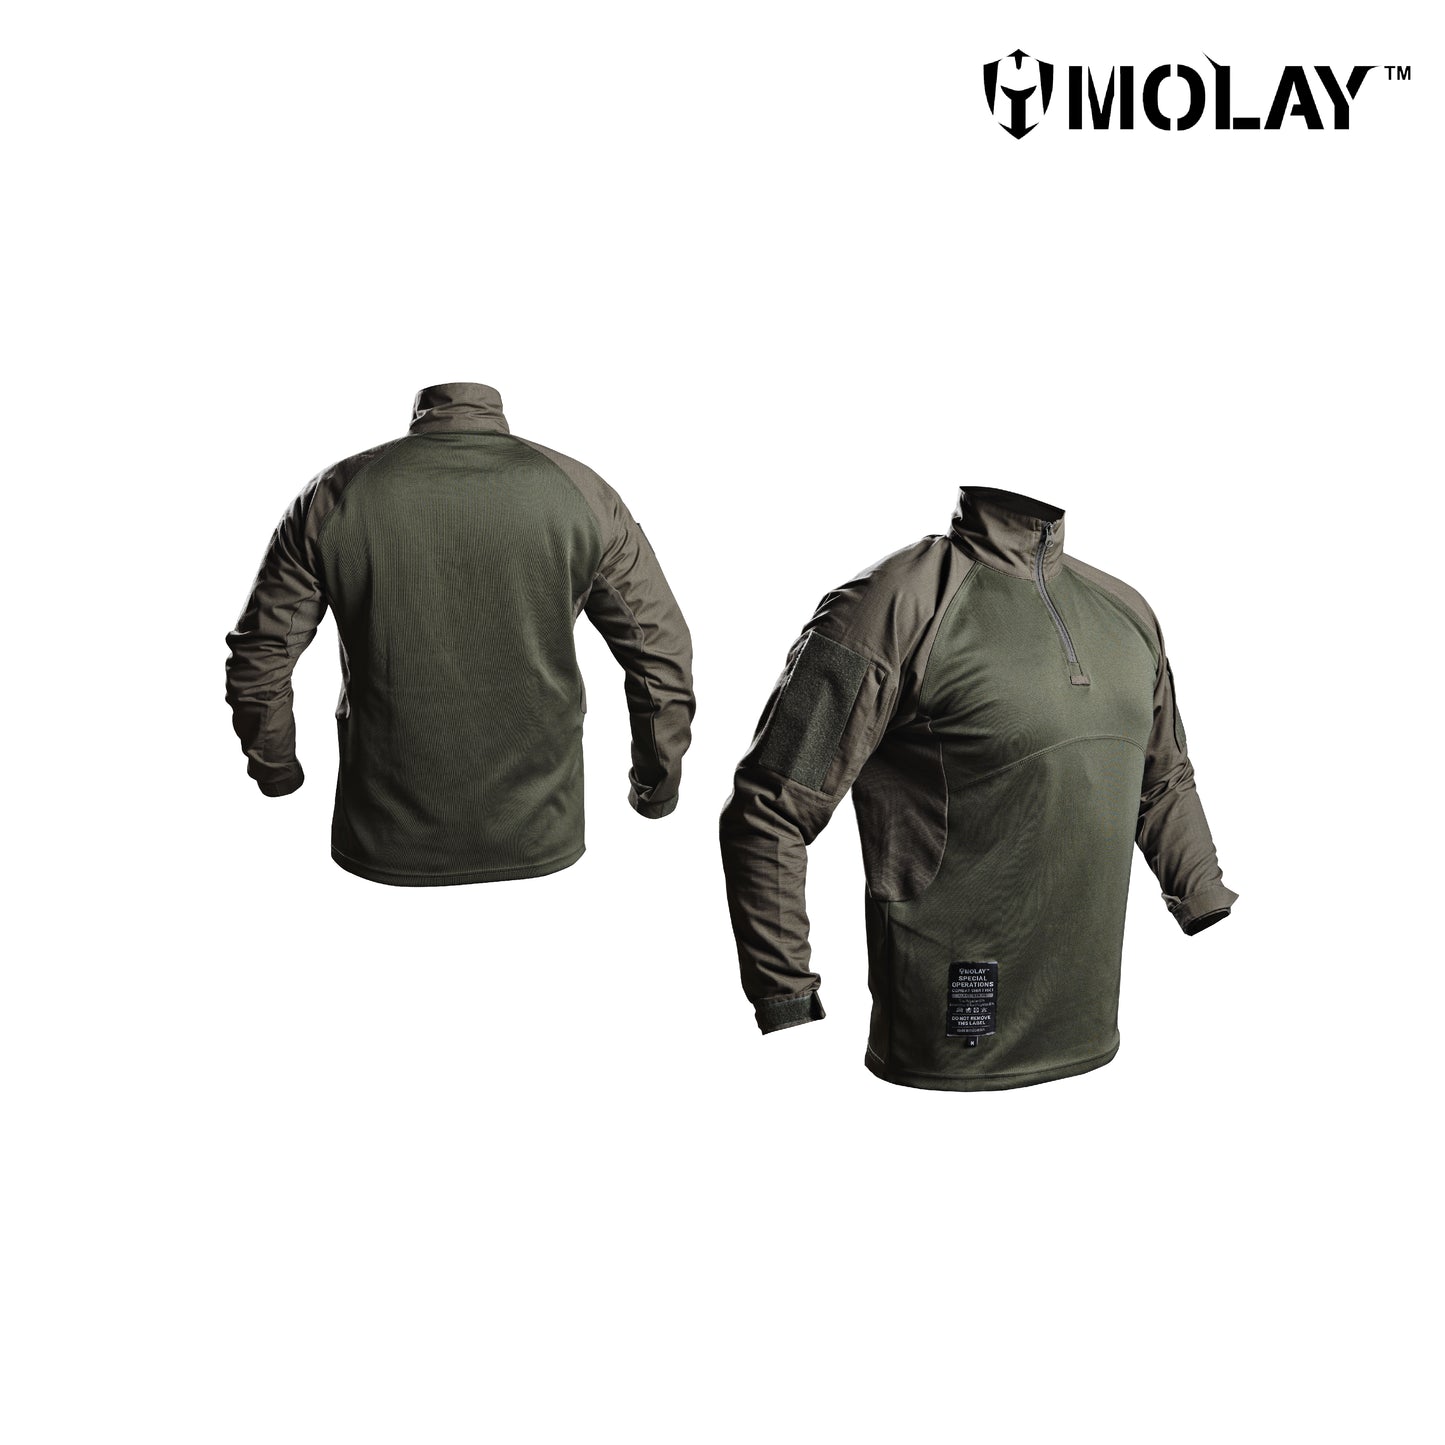 Molay® Spec-Ops Combat Shirt